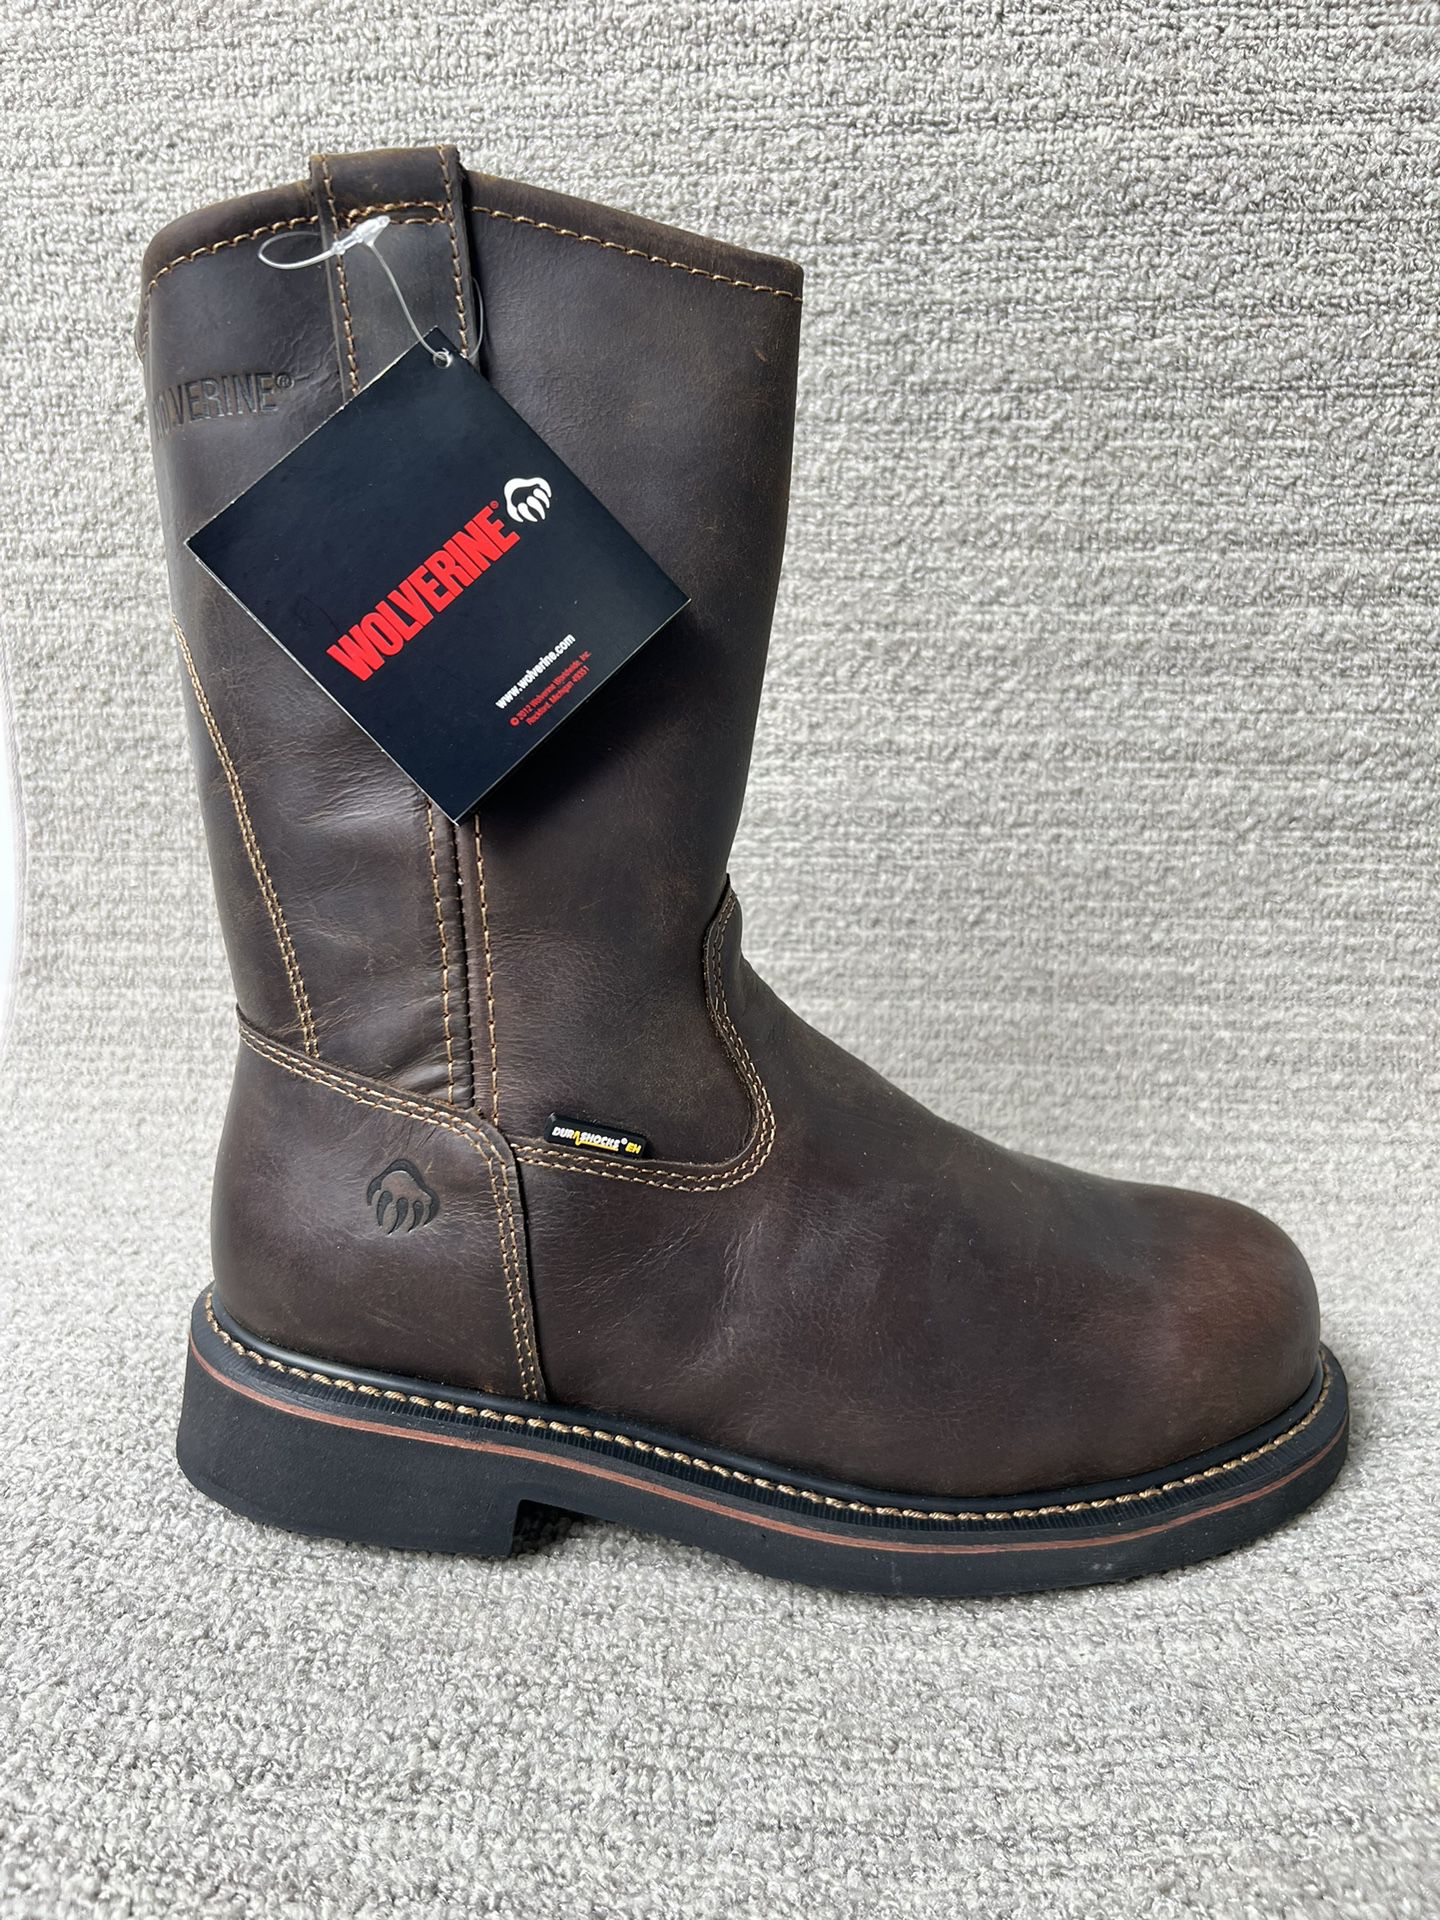 Wolverine Work Boots Men’s 11.5 Wide Brek Wellington Steel Toe Waterproof Slip Resistant 